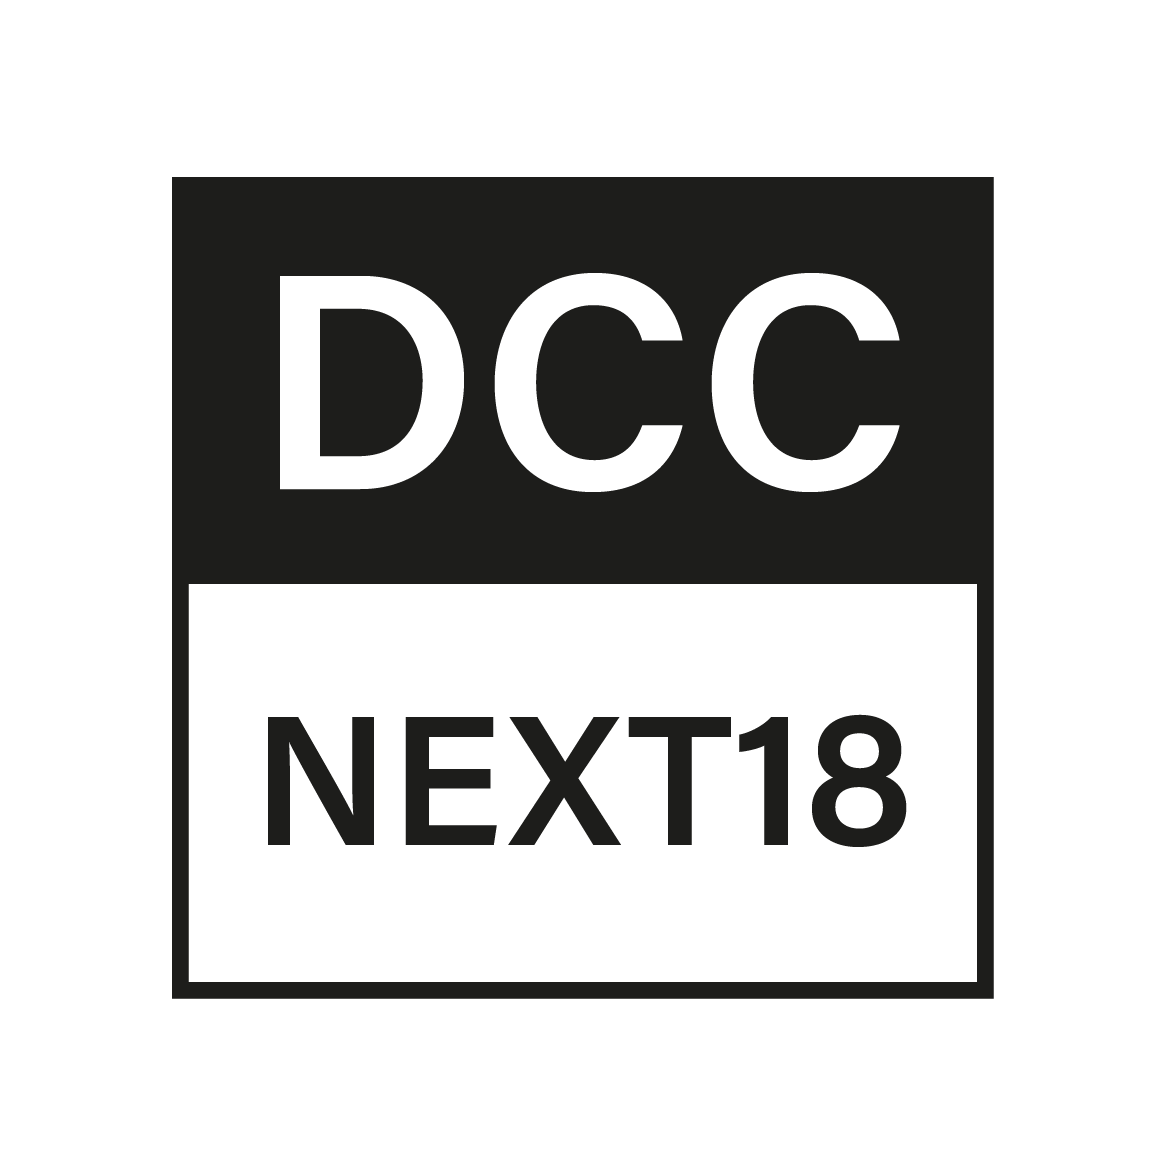 DCC_Next18